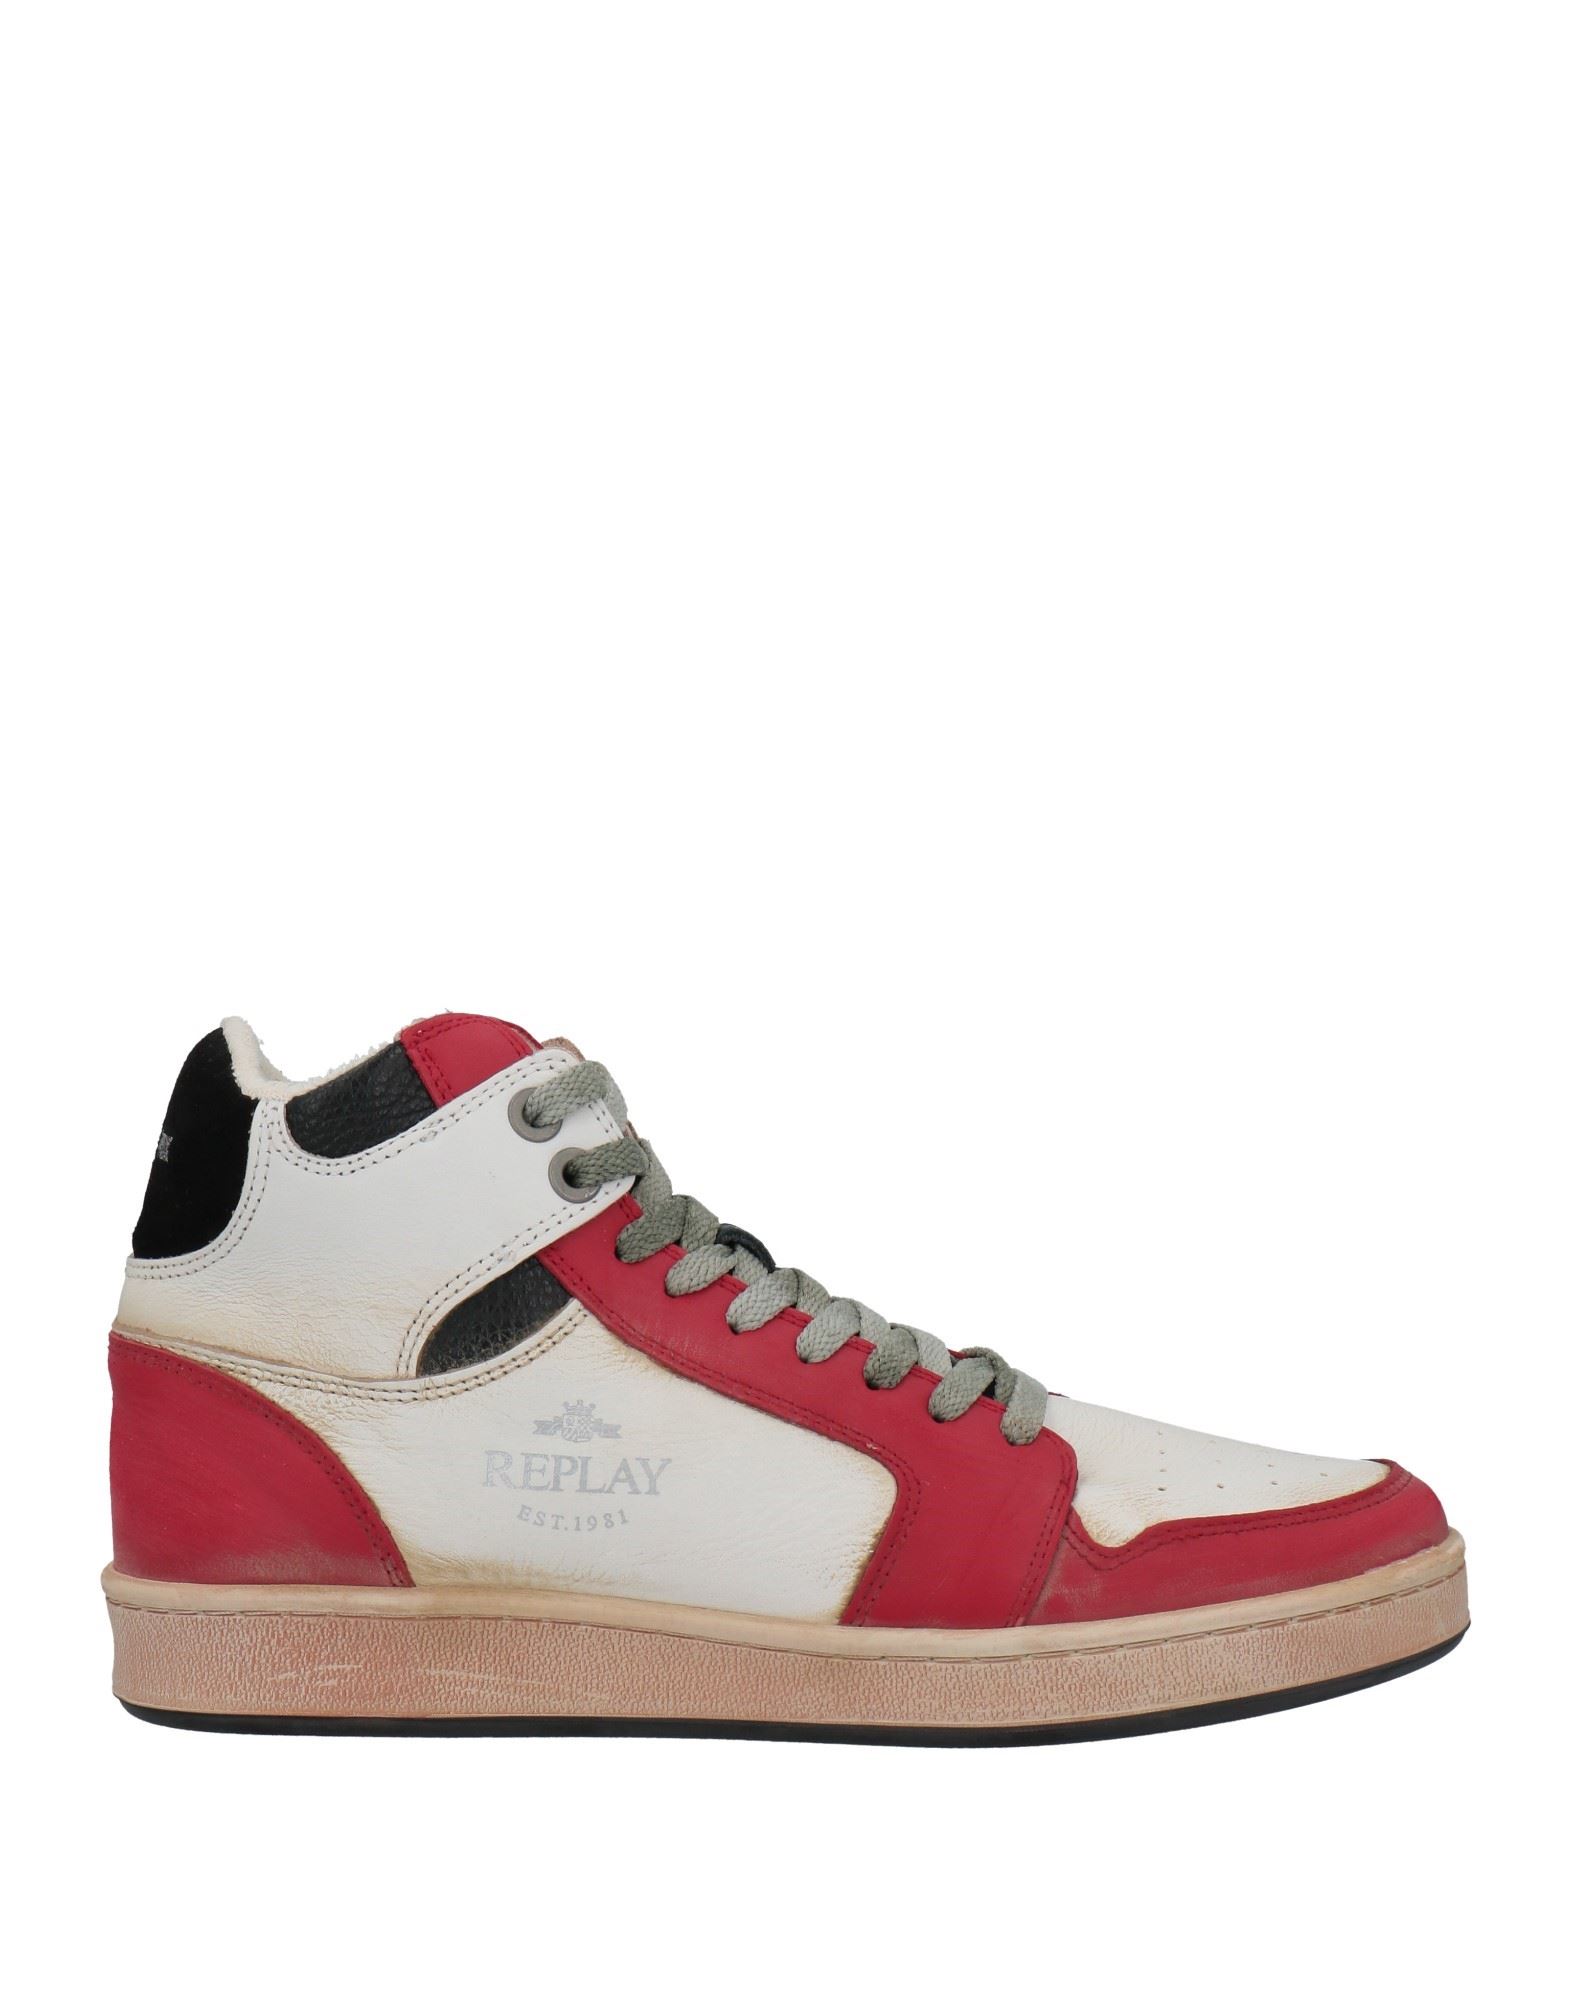  Replay Men's Sneaker, White Red 079, 11